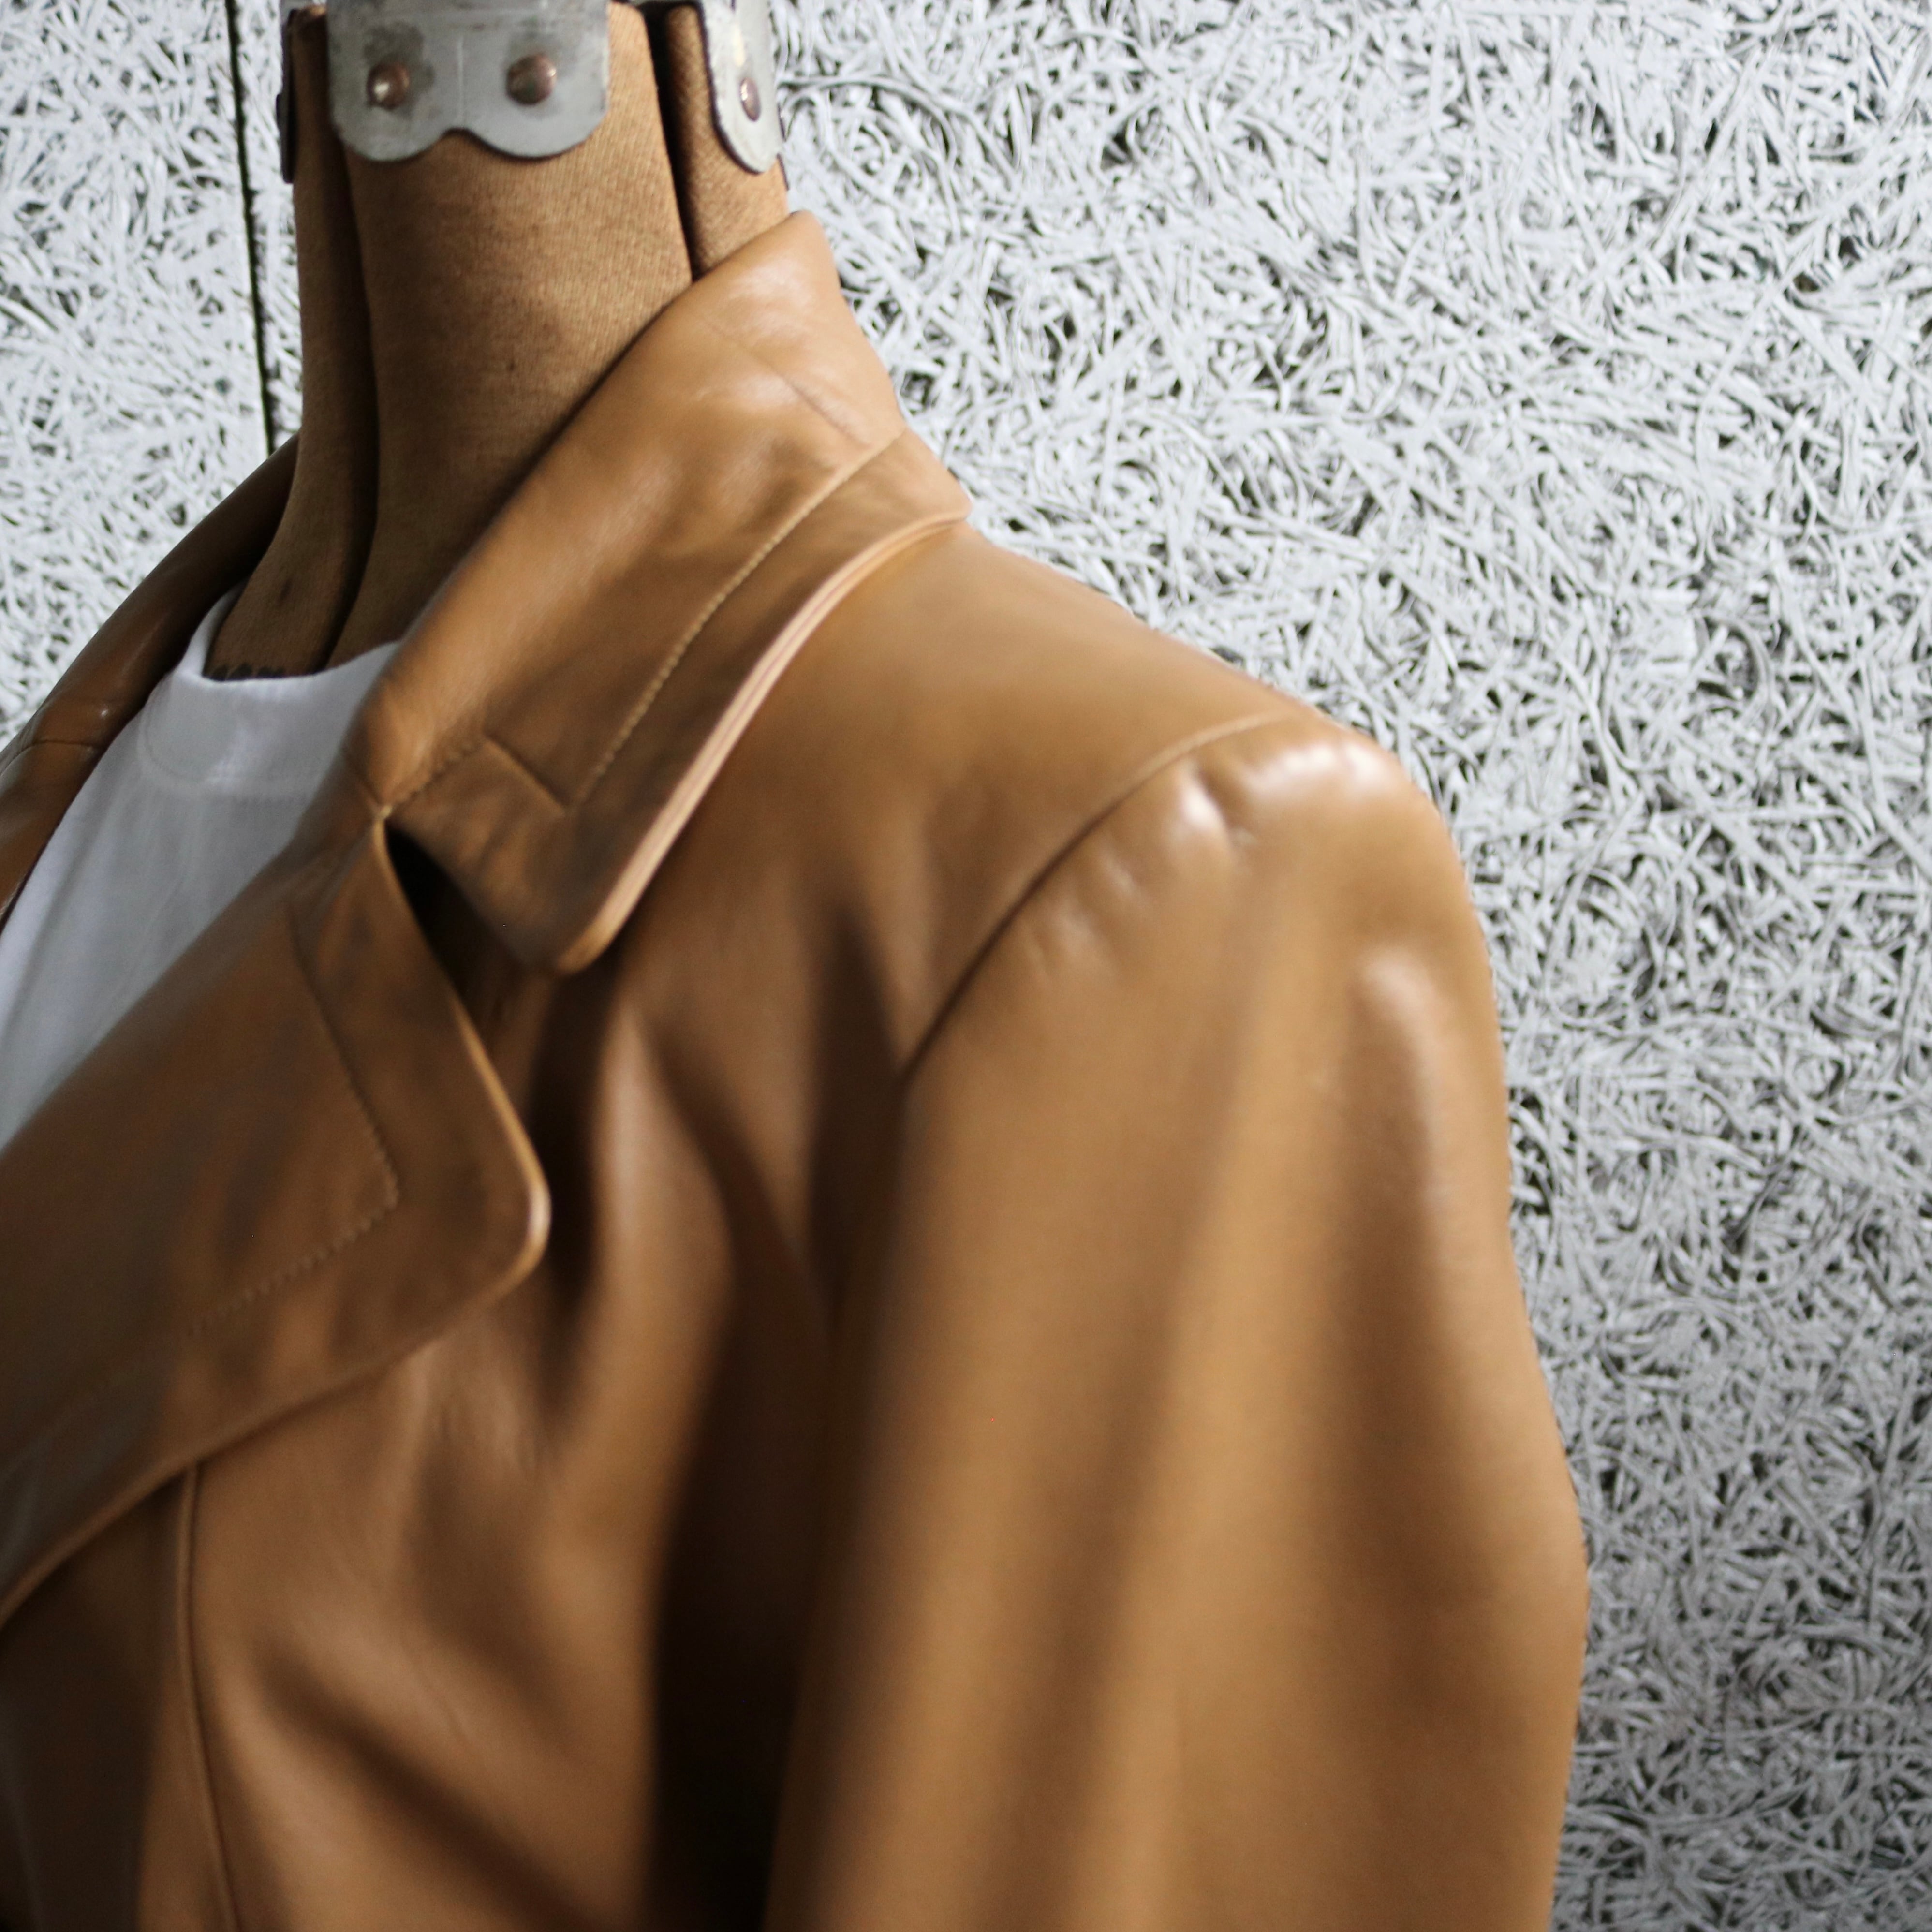 Spain ☆本革☆ old leather jacket